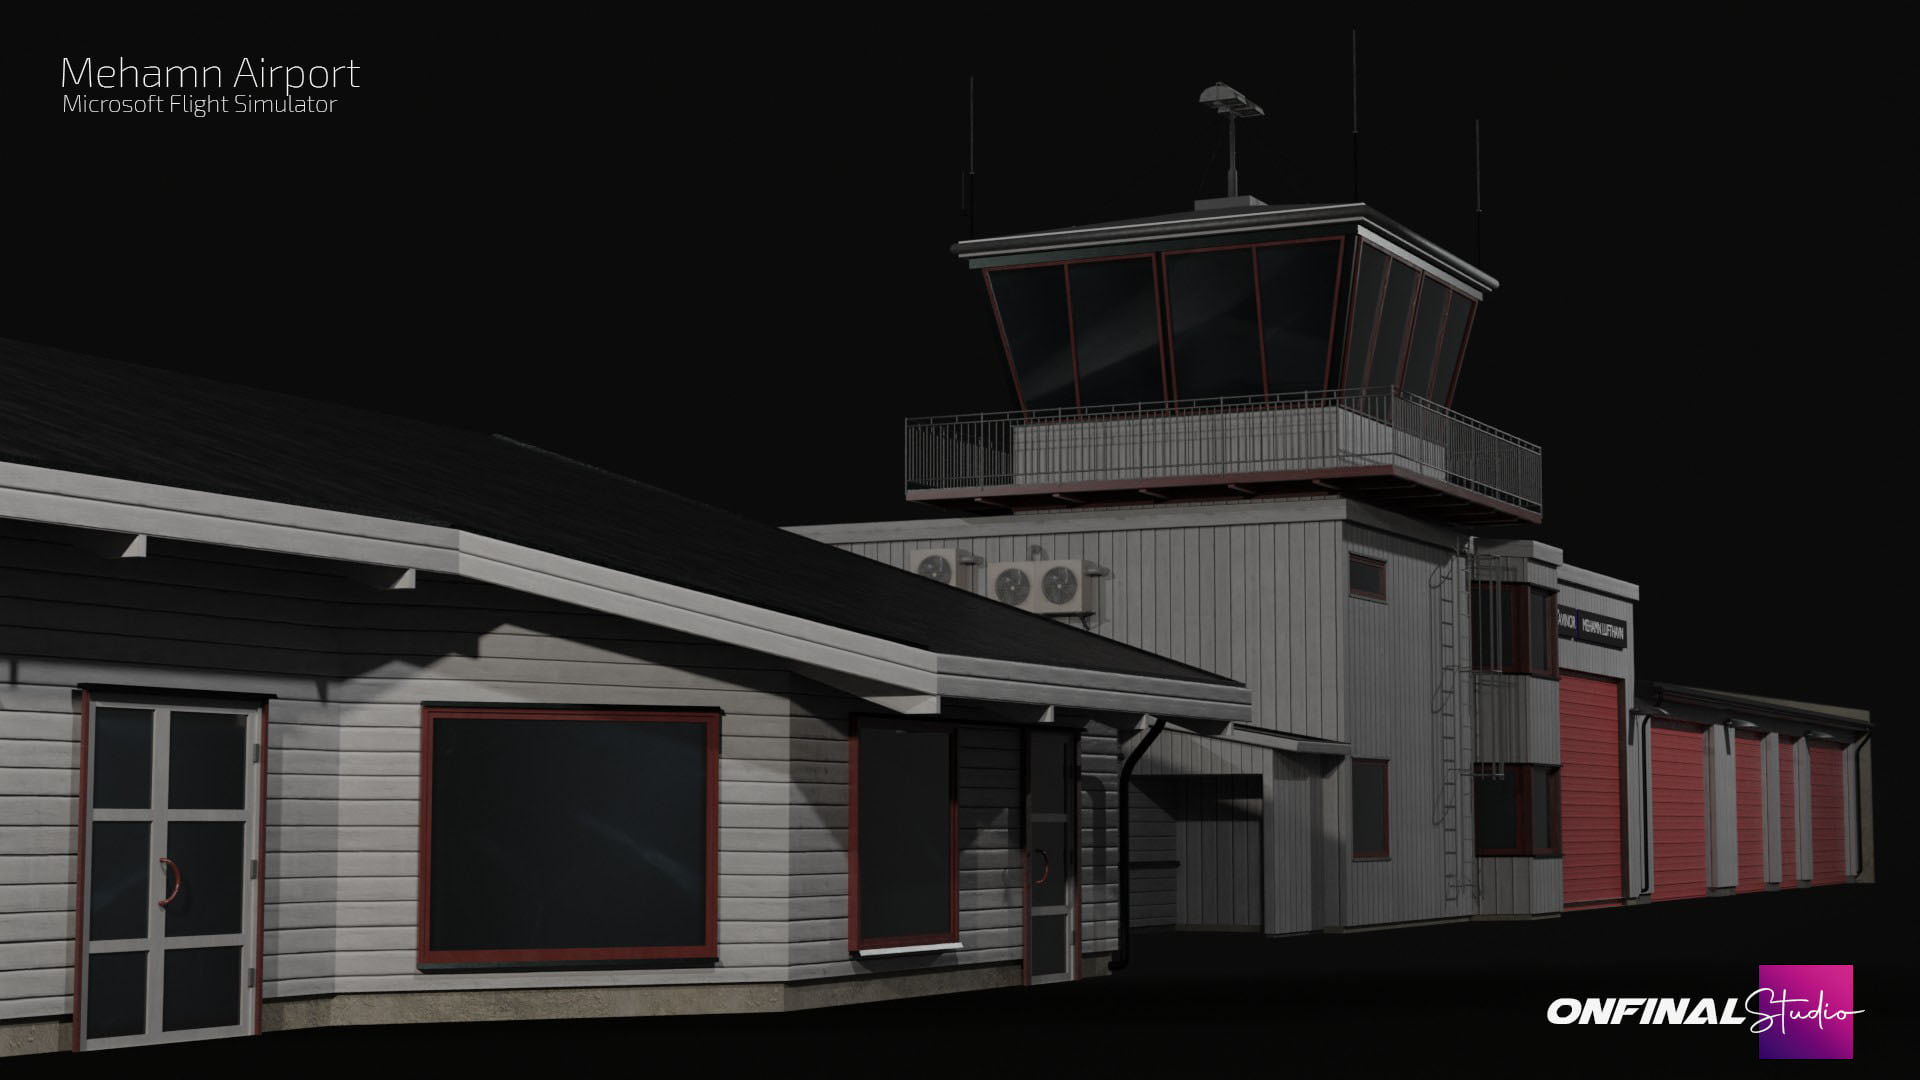 OnFinal Studios Announces Mehamn Airport for MSFS - OnFinal Studios